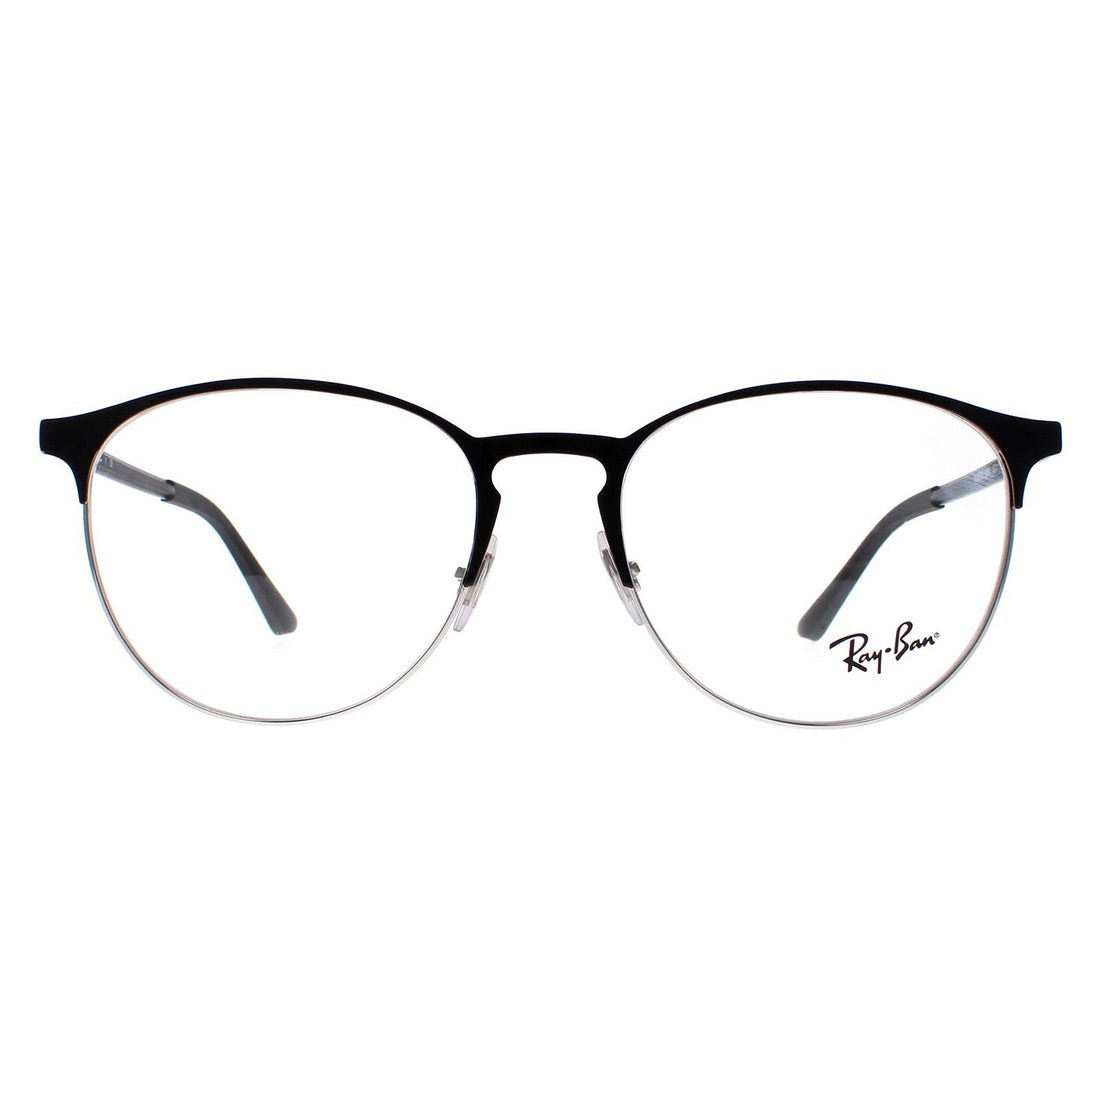 Ray-Ban 6375 Glasses Frames Black 53